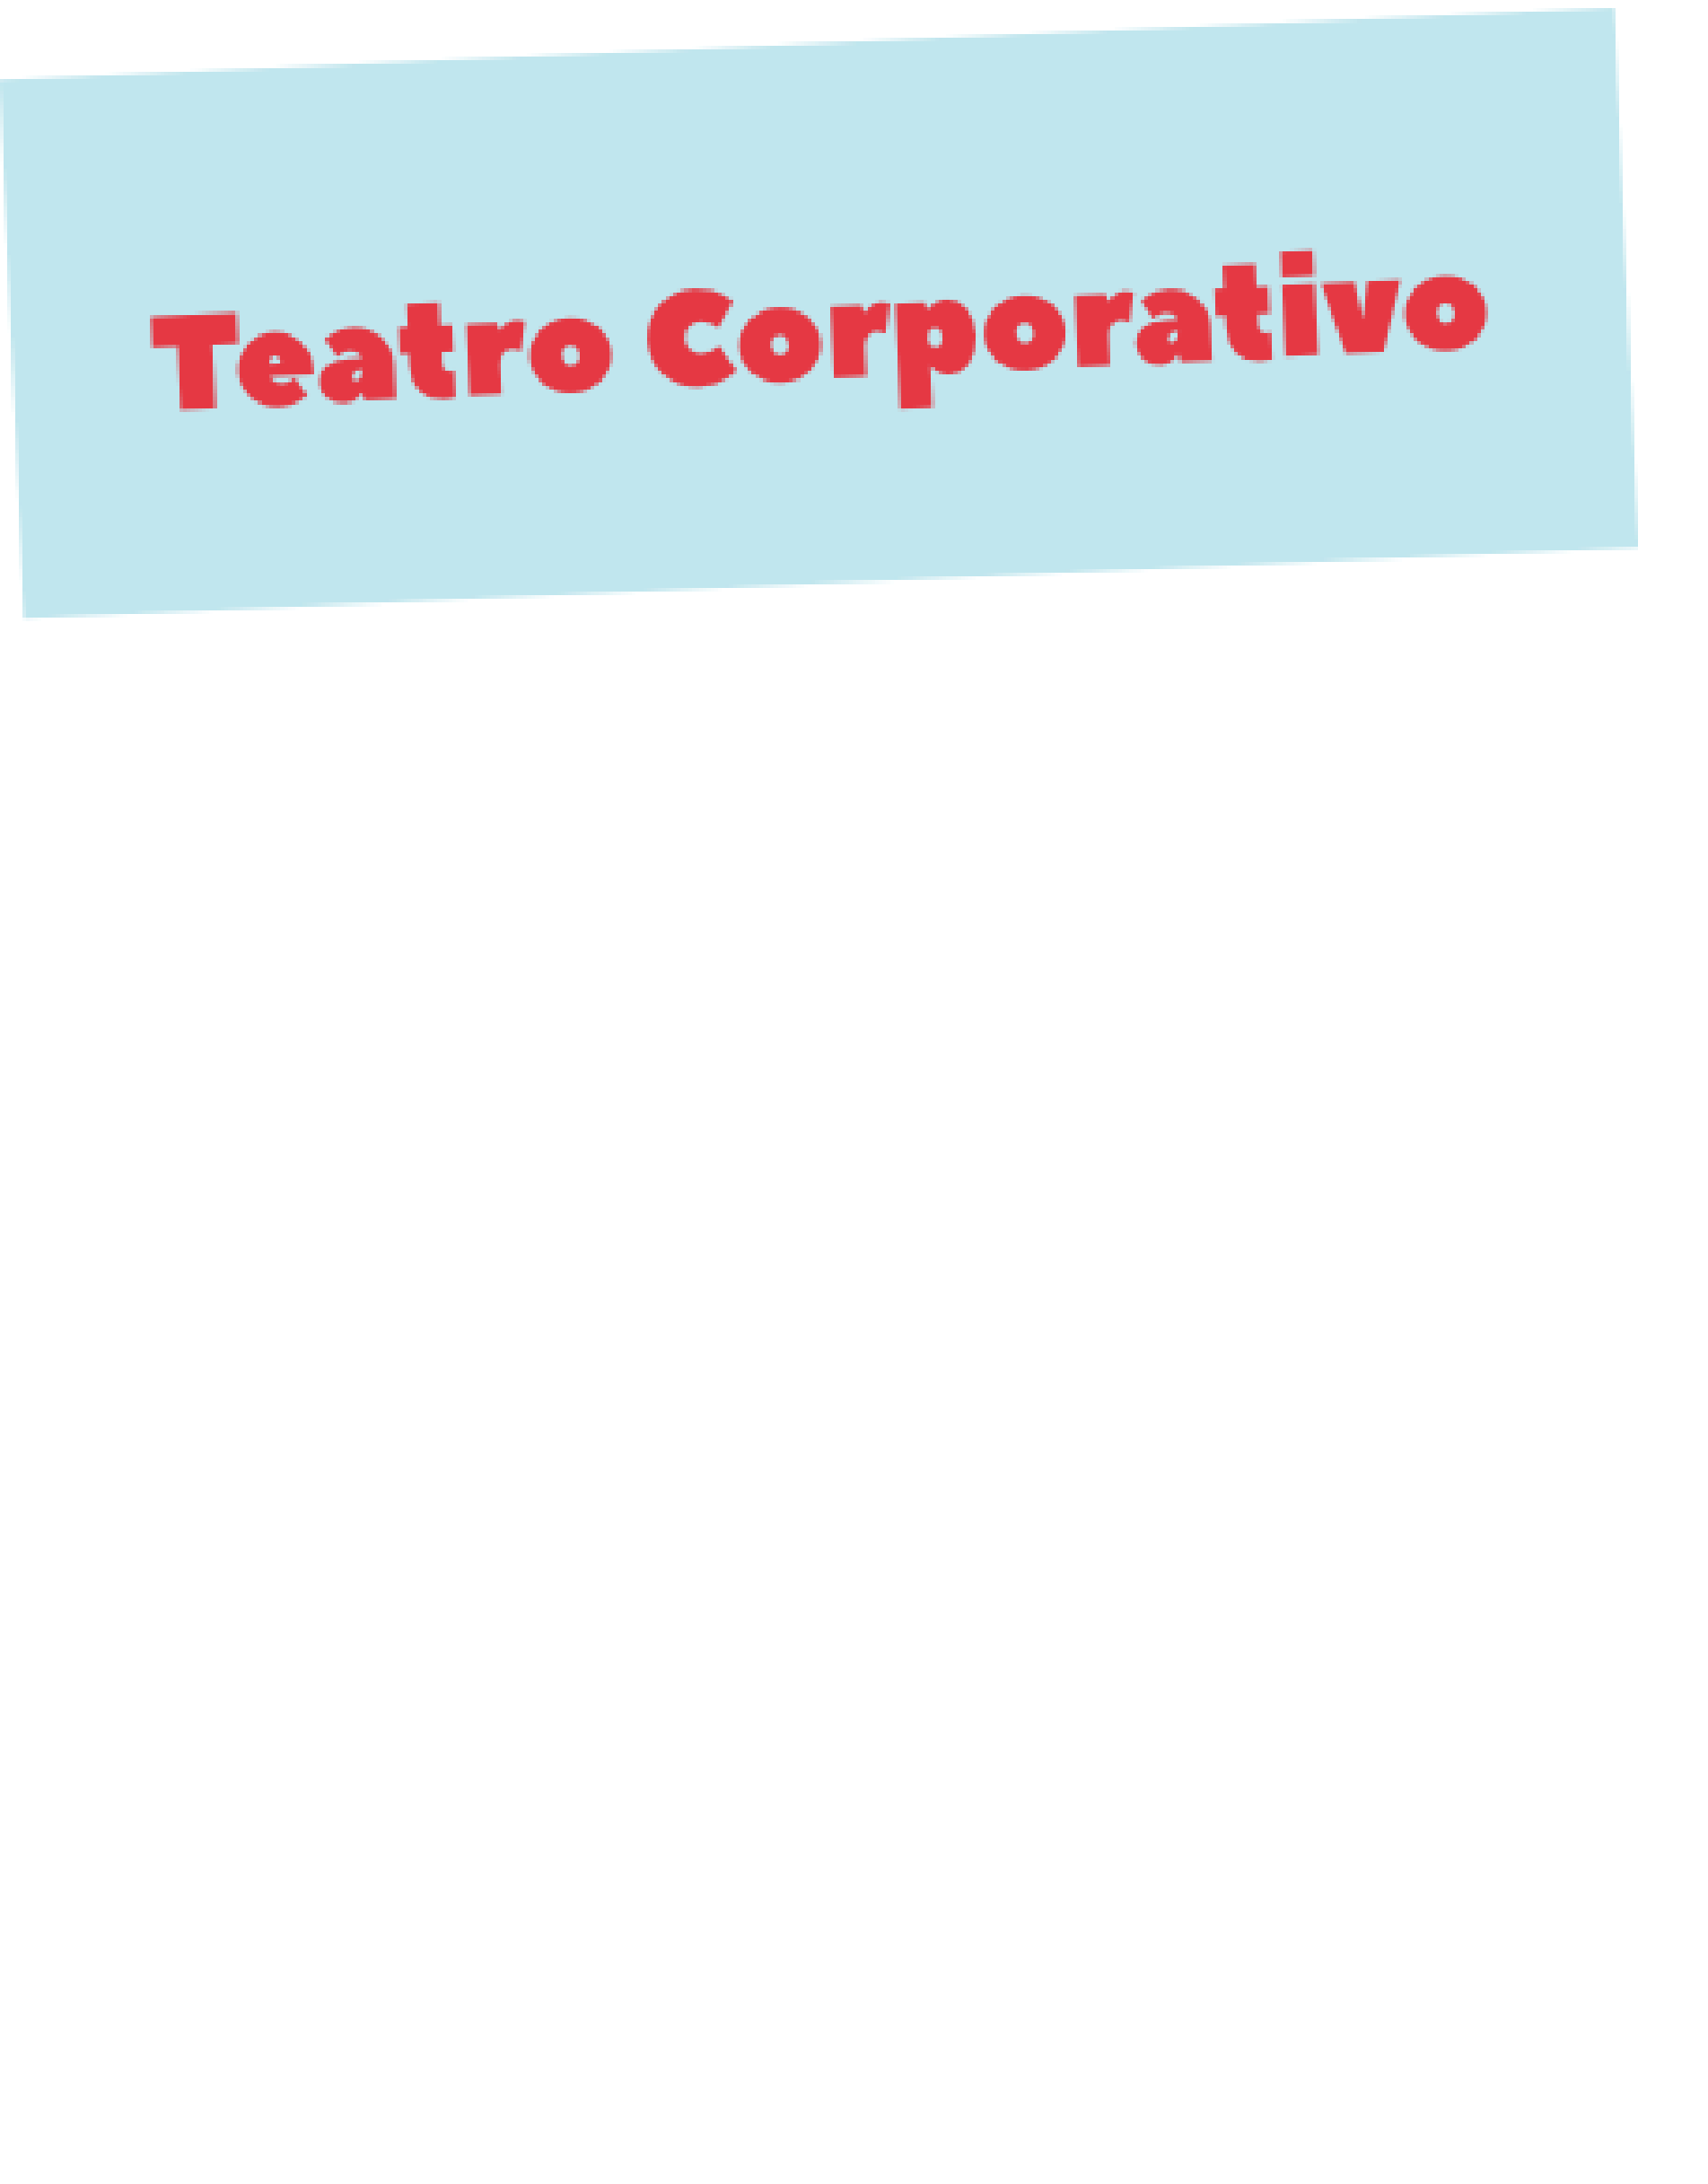 teatrocorporativo2edit-01